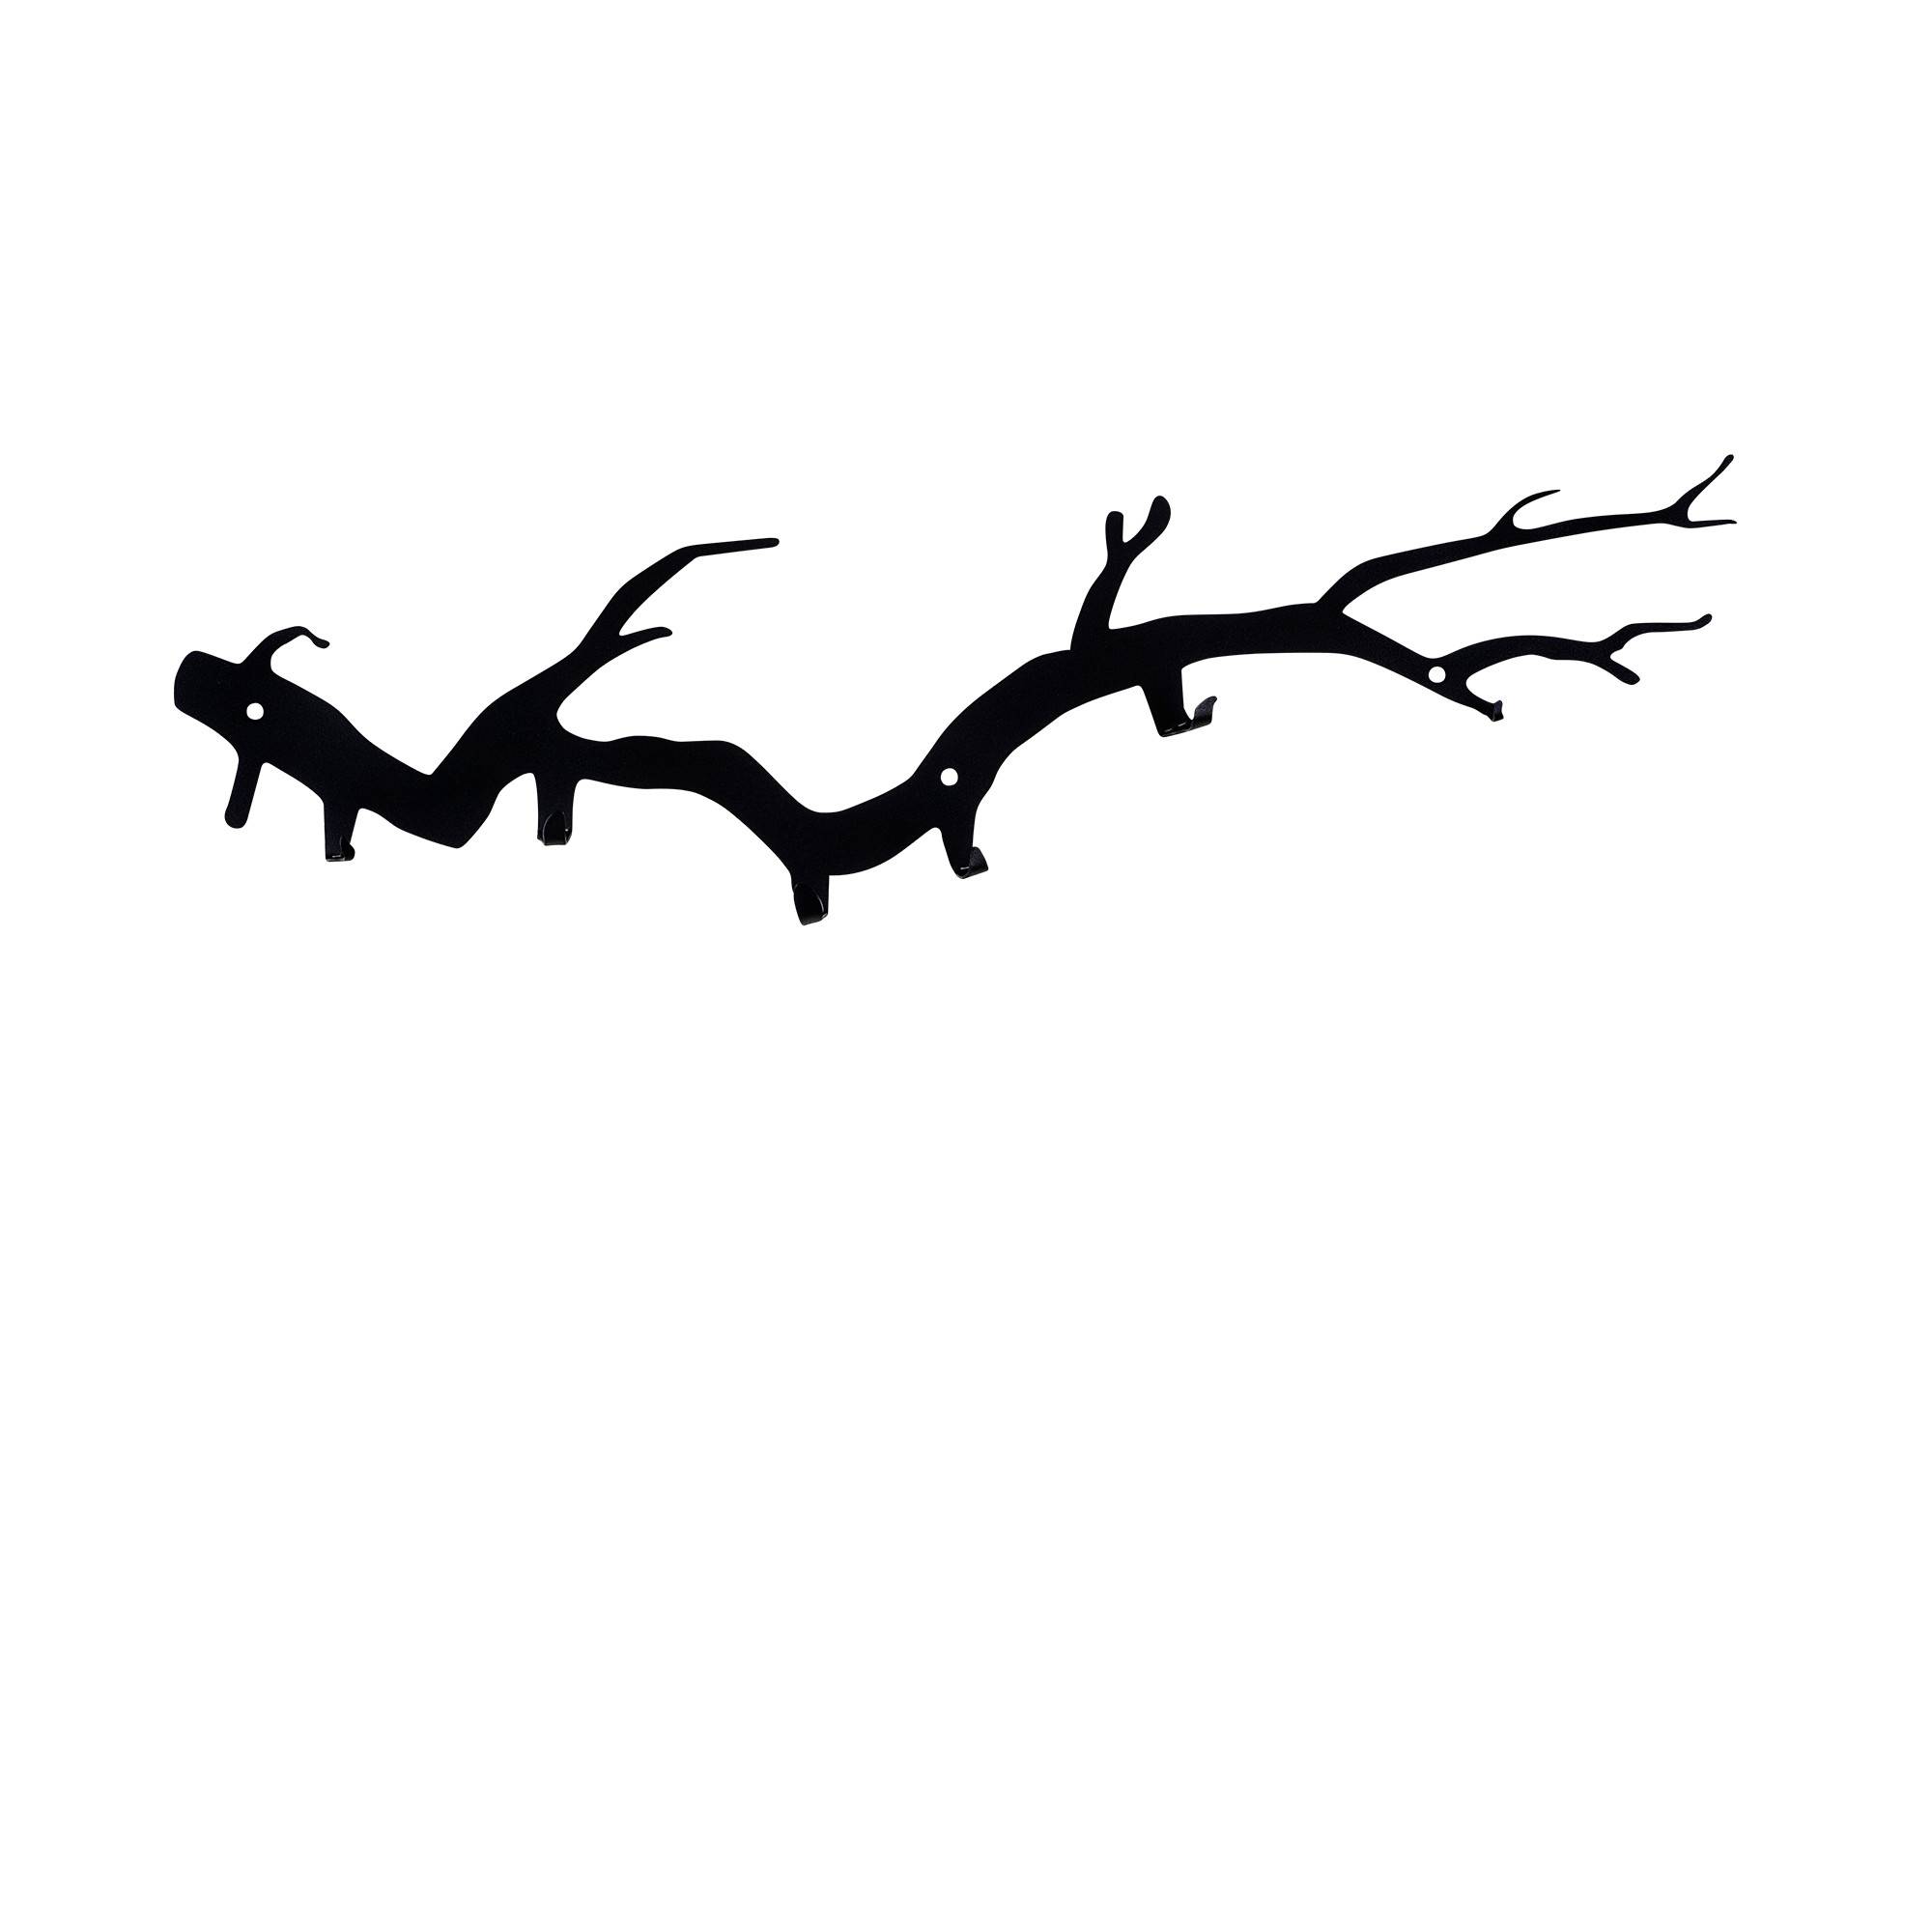 Support de cadre photo murale Takumi Branche ornée Métal Noir